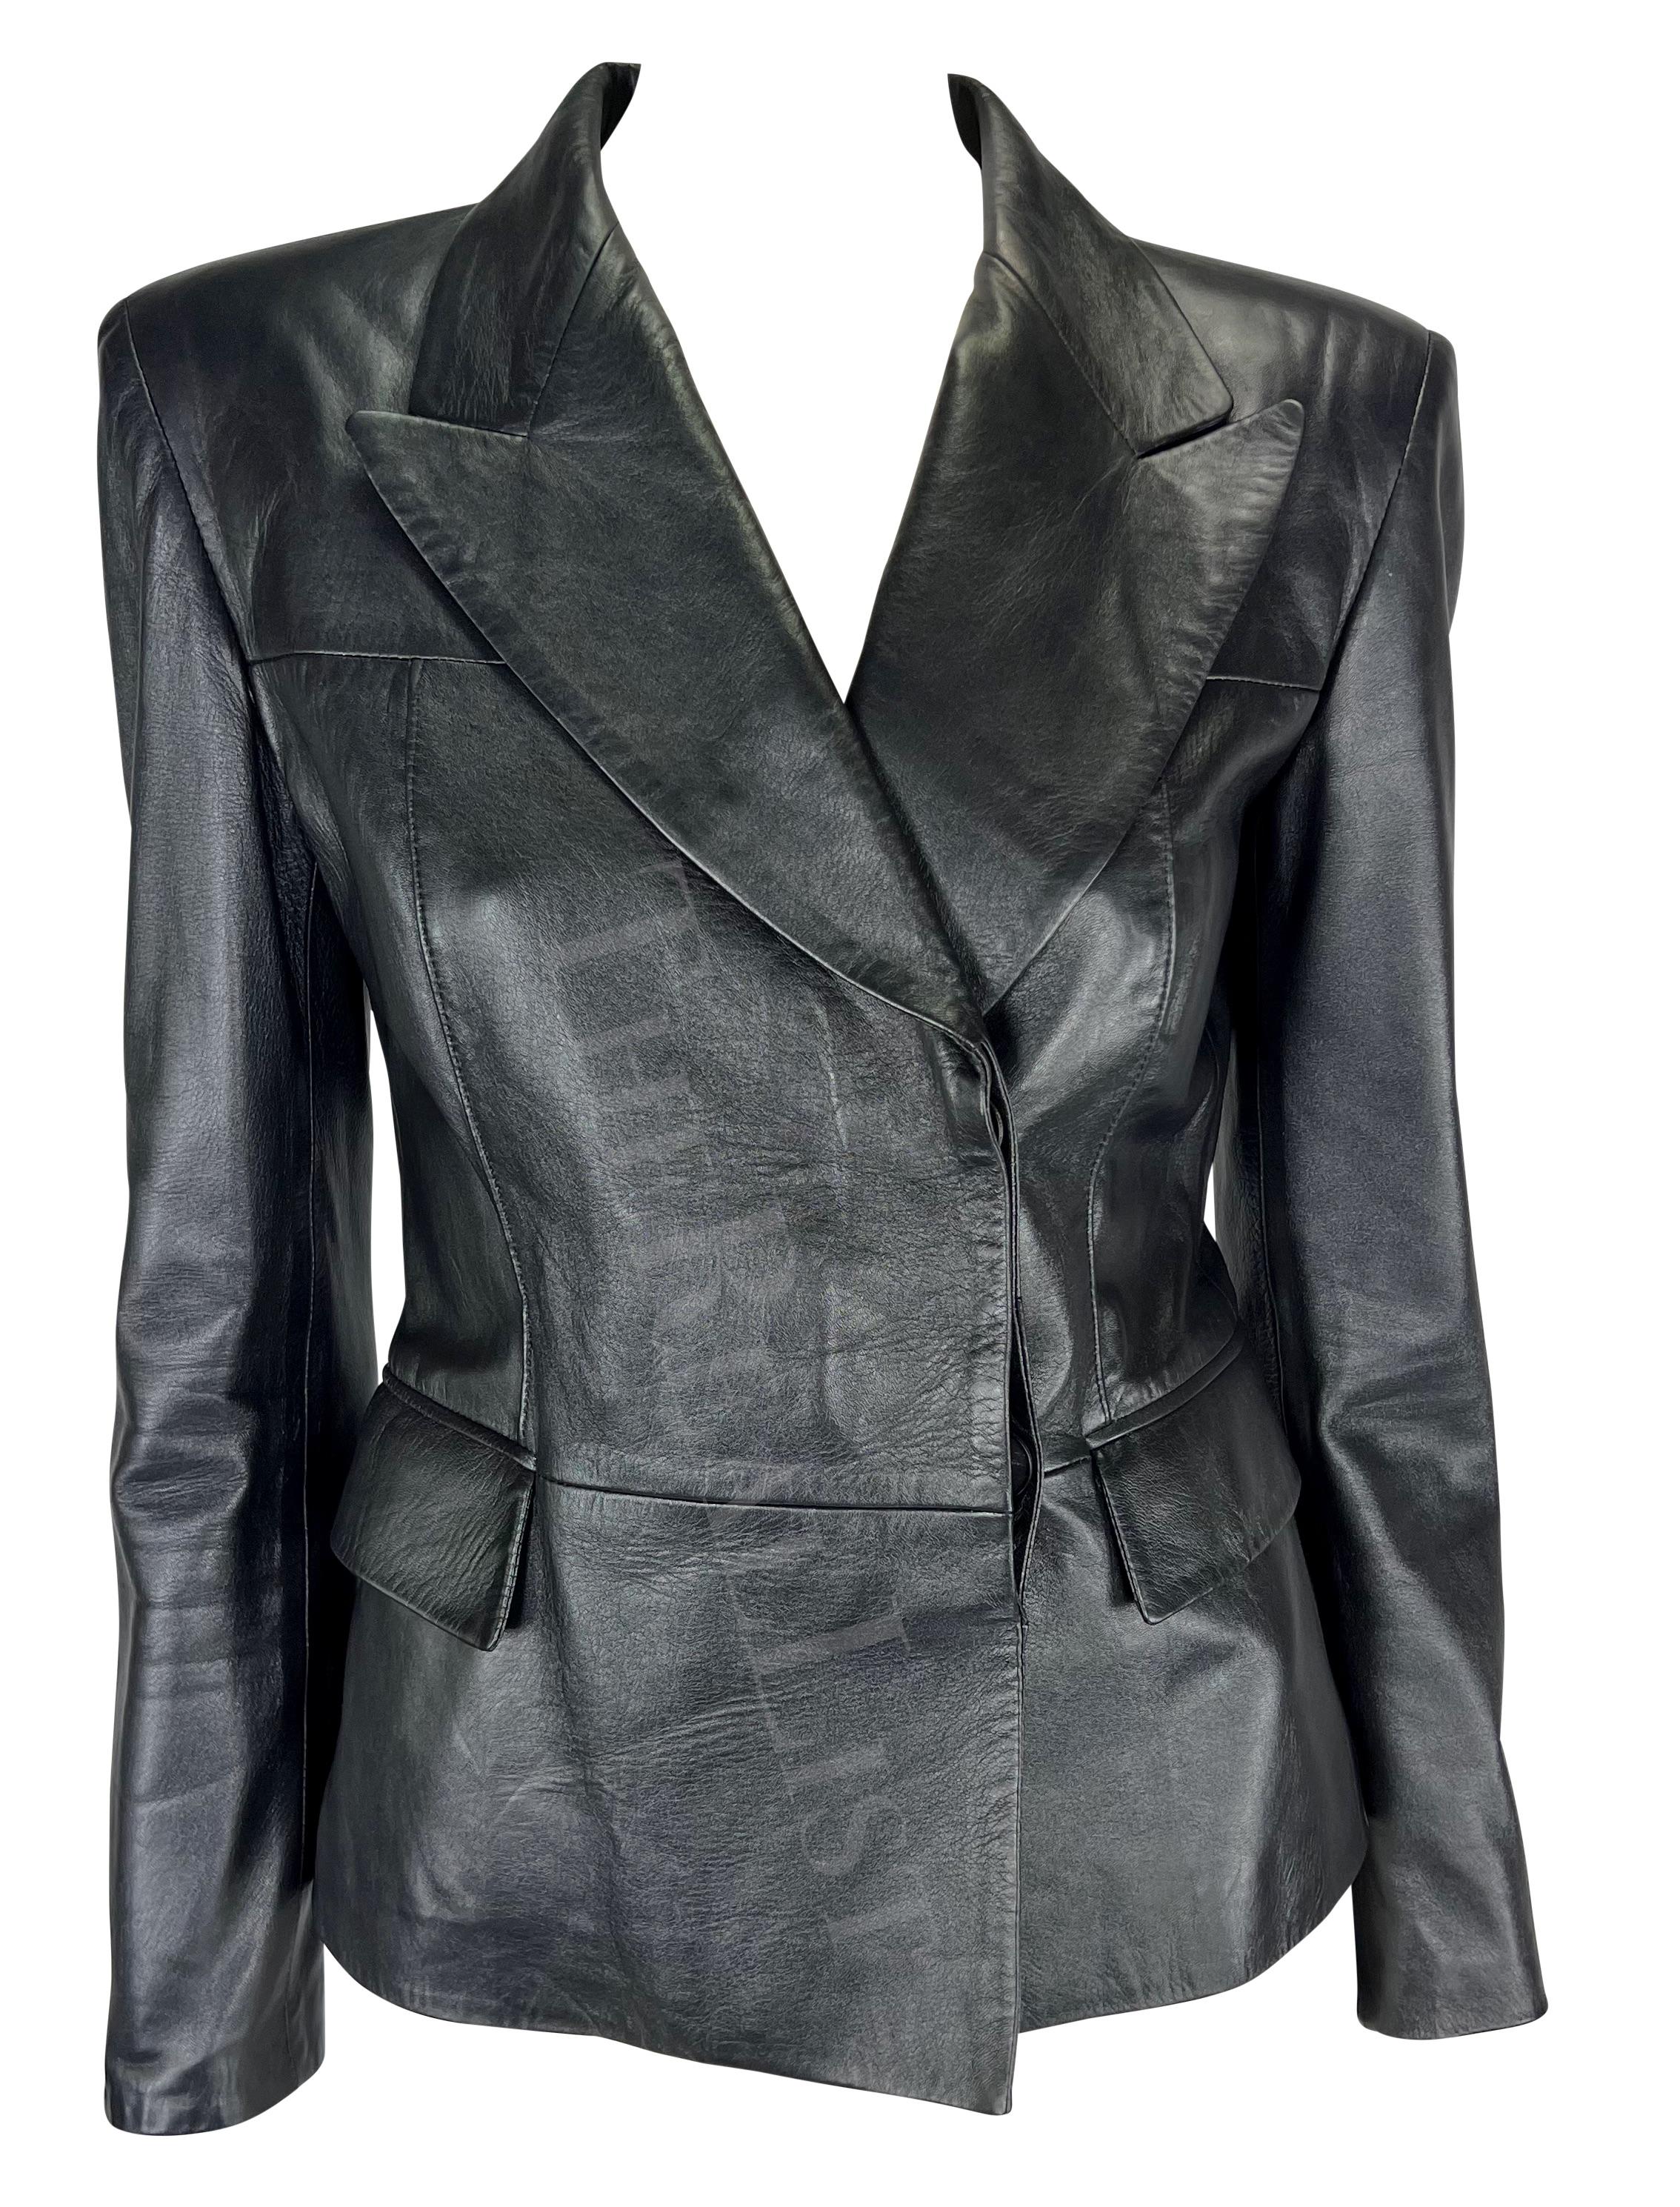 F/W 1997 Gucci by Tom Ford Runway Metallic Black Leather Blazer Jacket For Sale 5